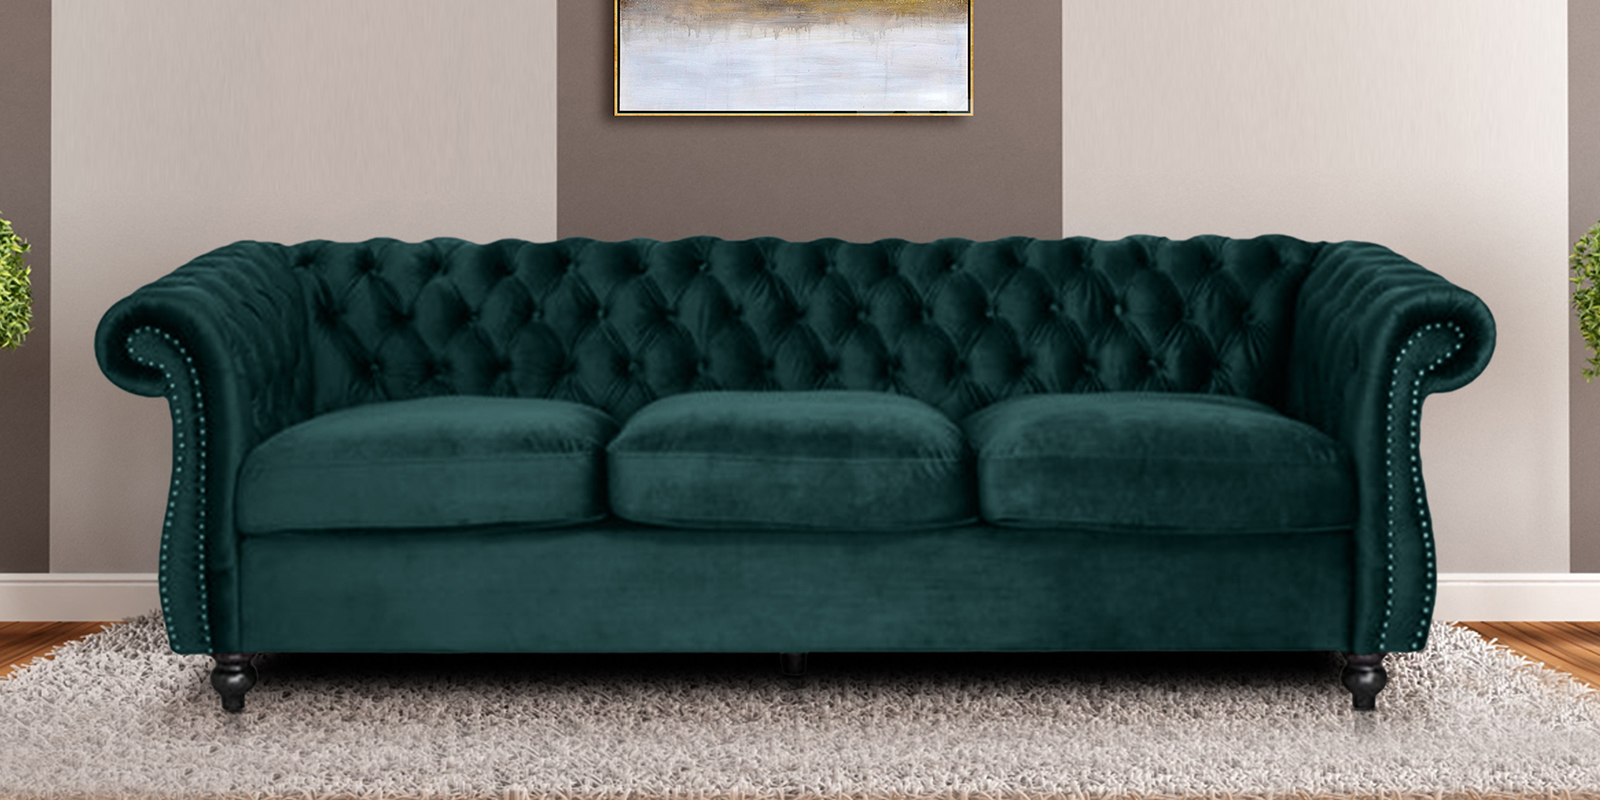 Phenomenal Velvet 3 Seater Sofa in Green Colour - Dreamzz ...